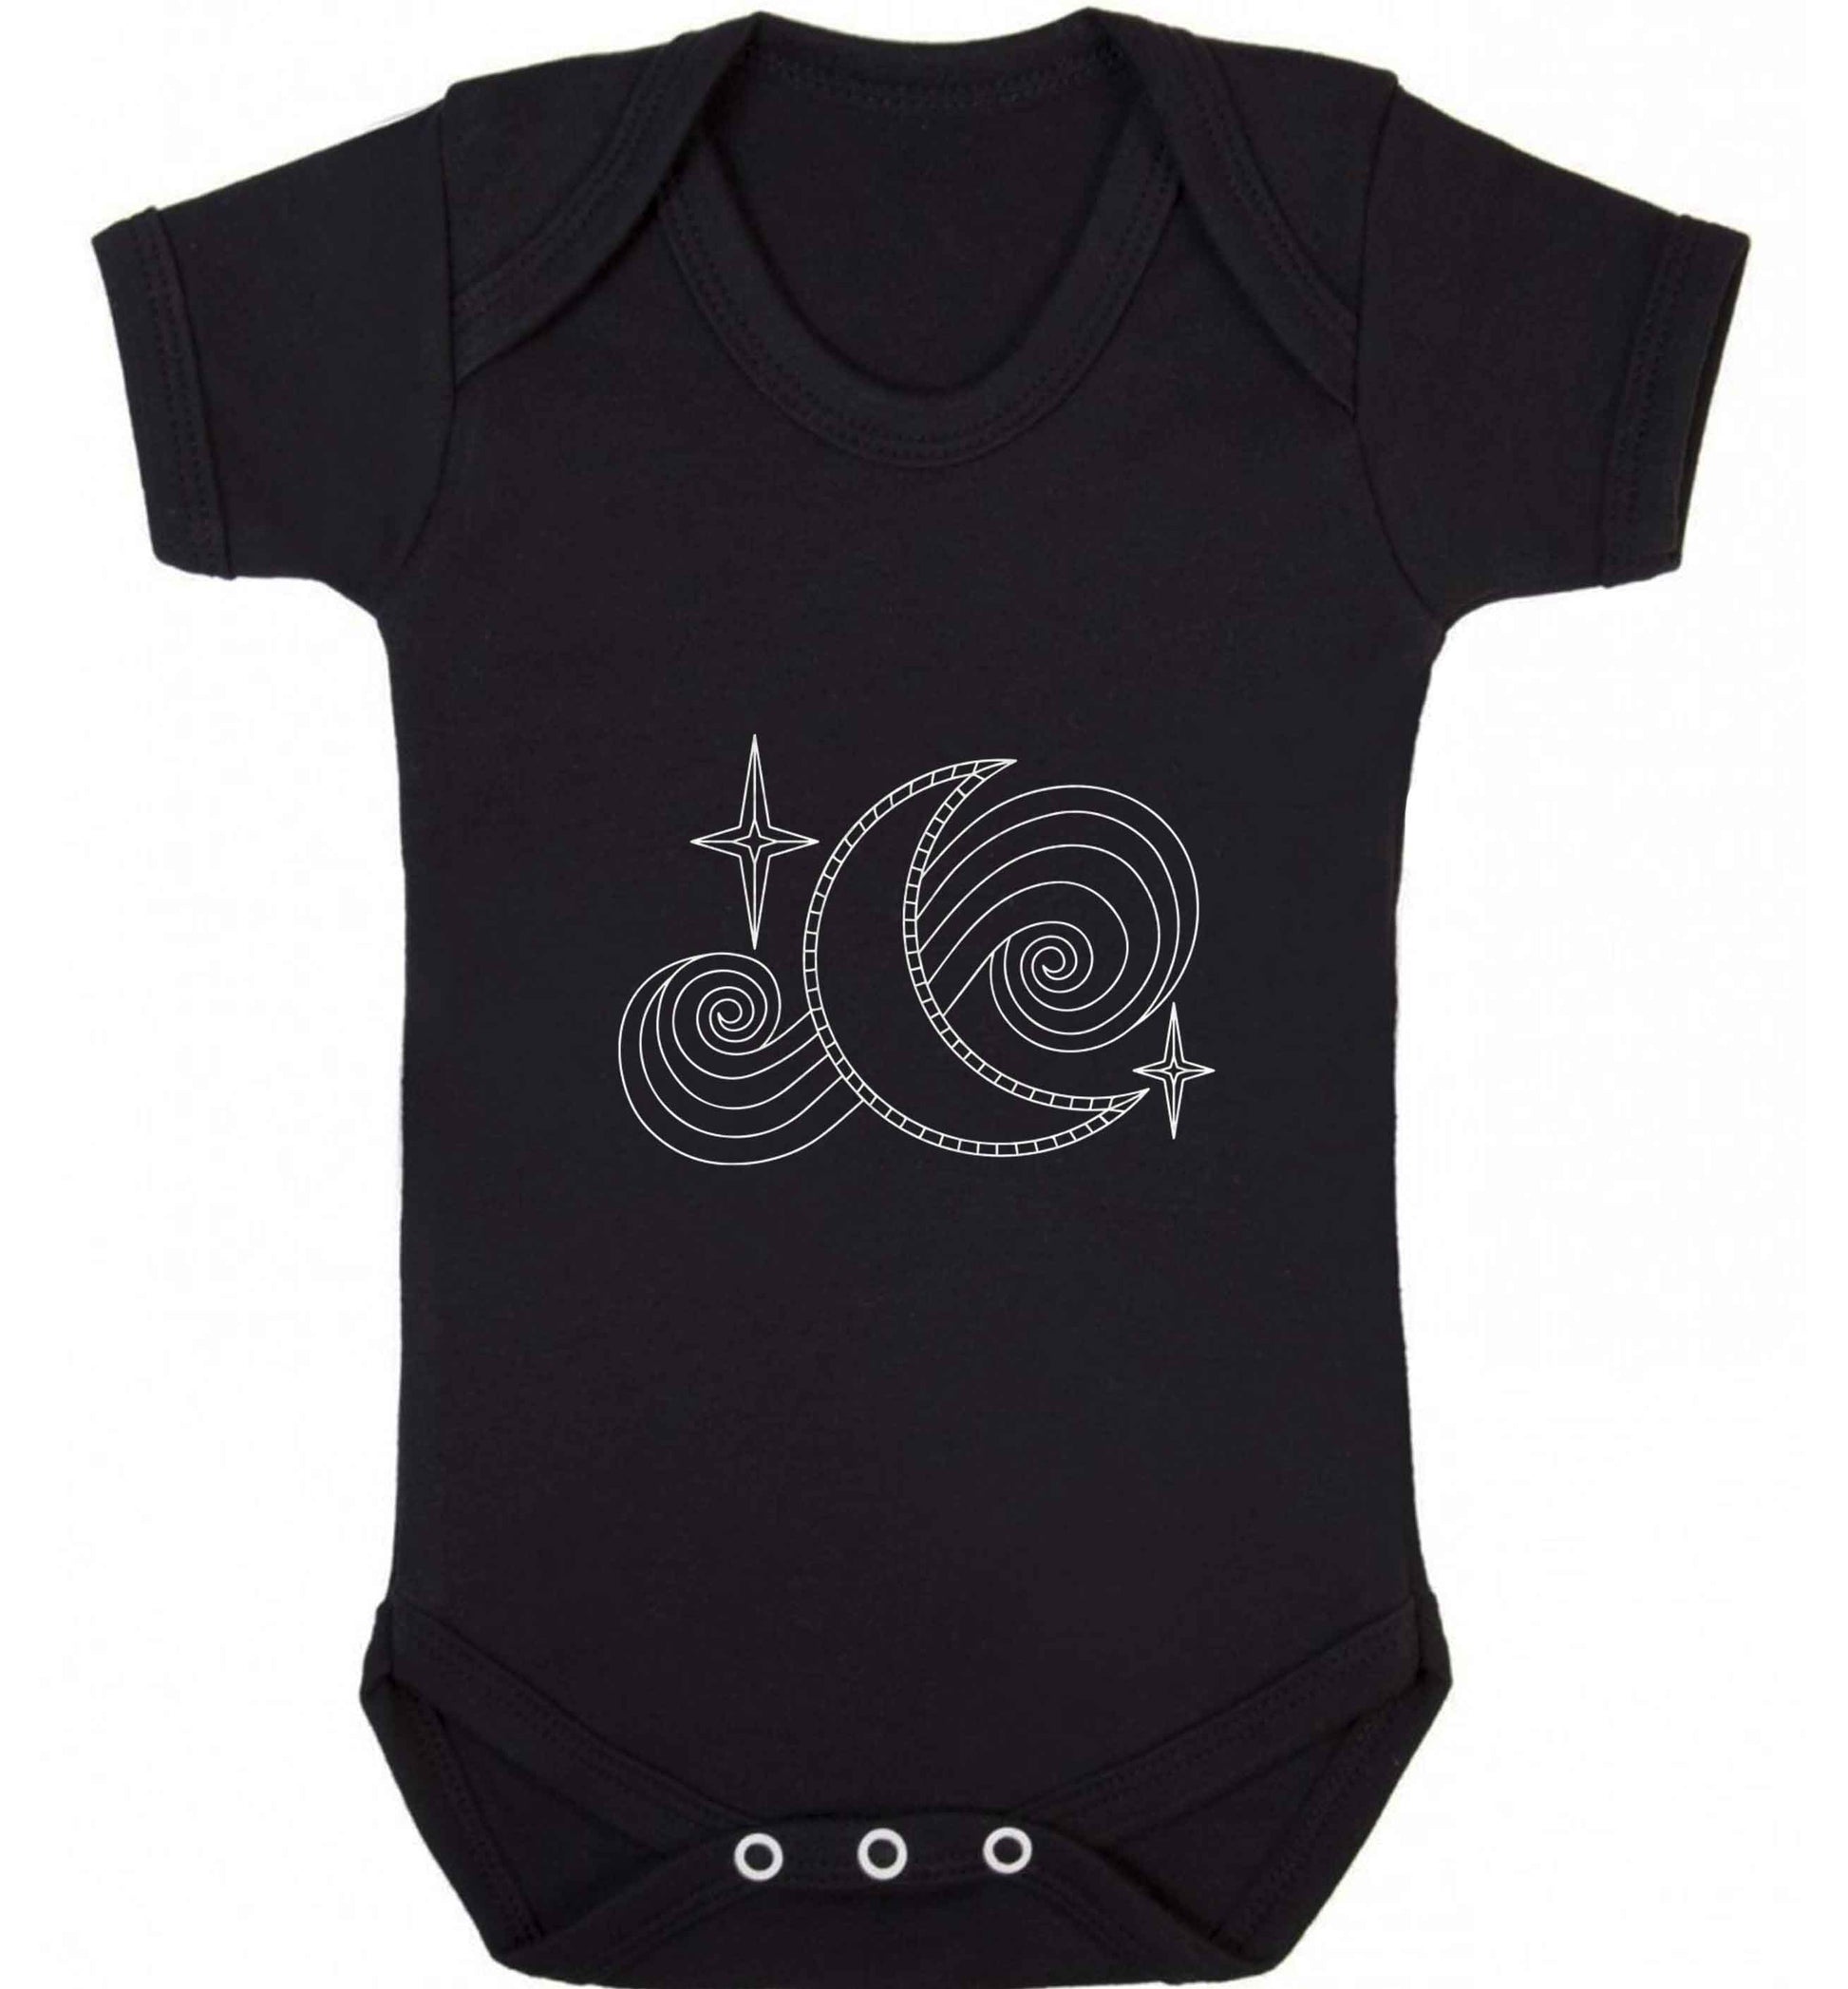 Moon and stars illustration baby vest black 18-24 months